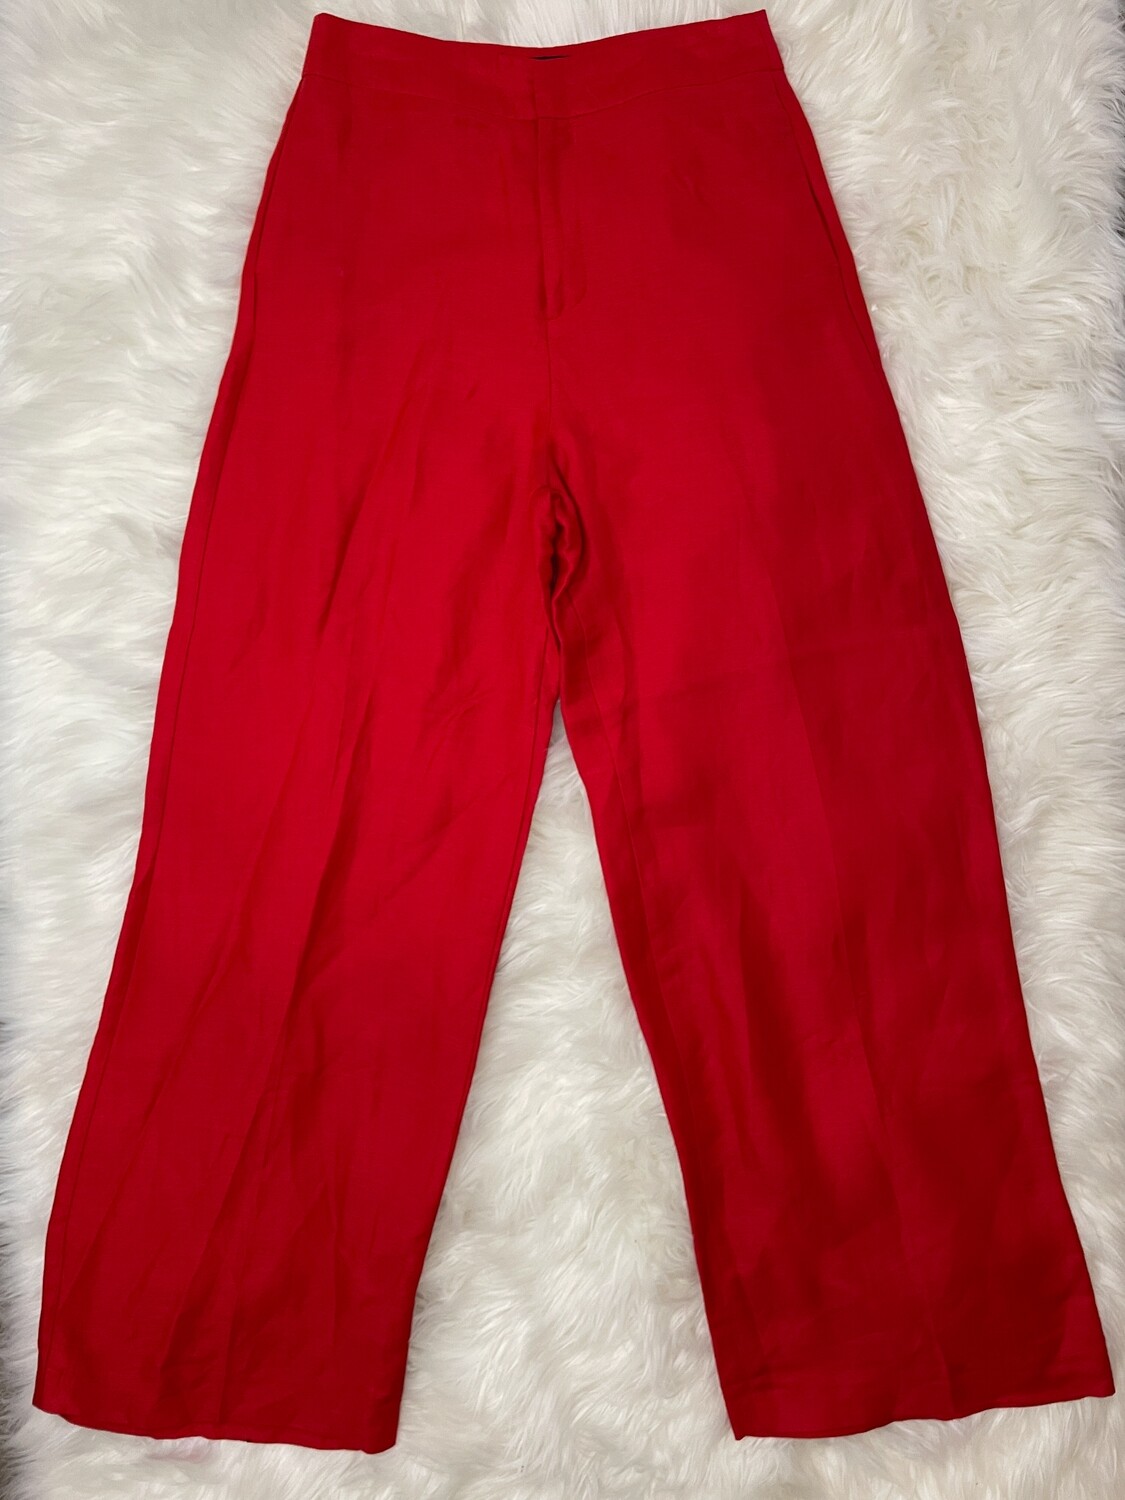 Zara Basic Red Wide Leg Linen Pants - M